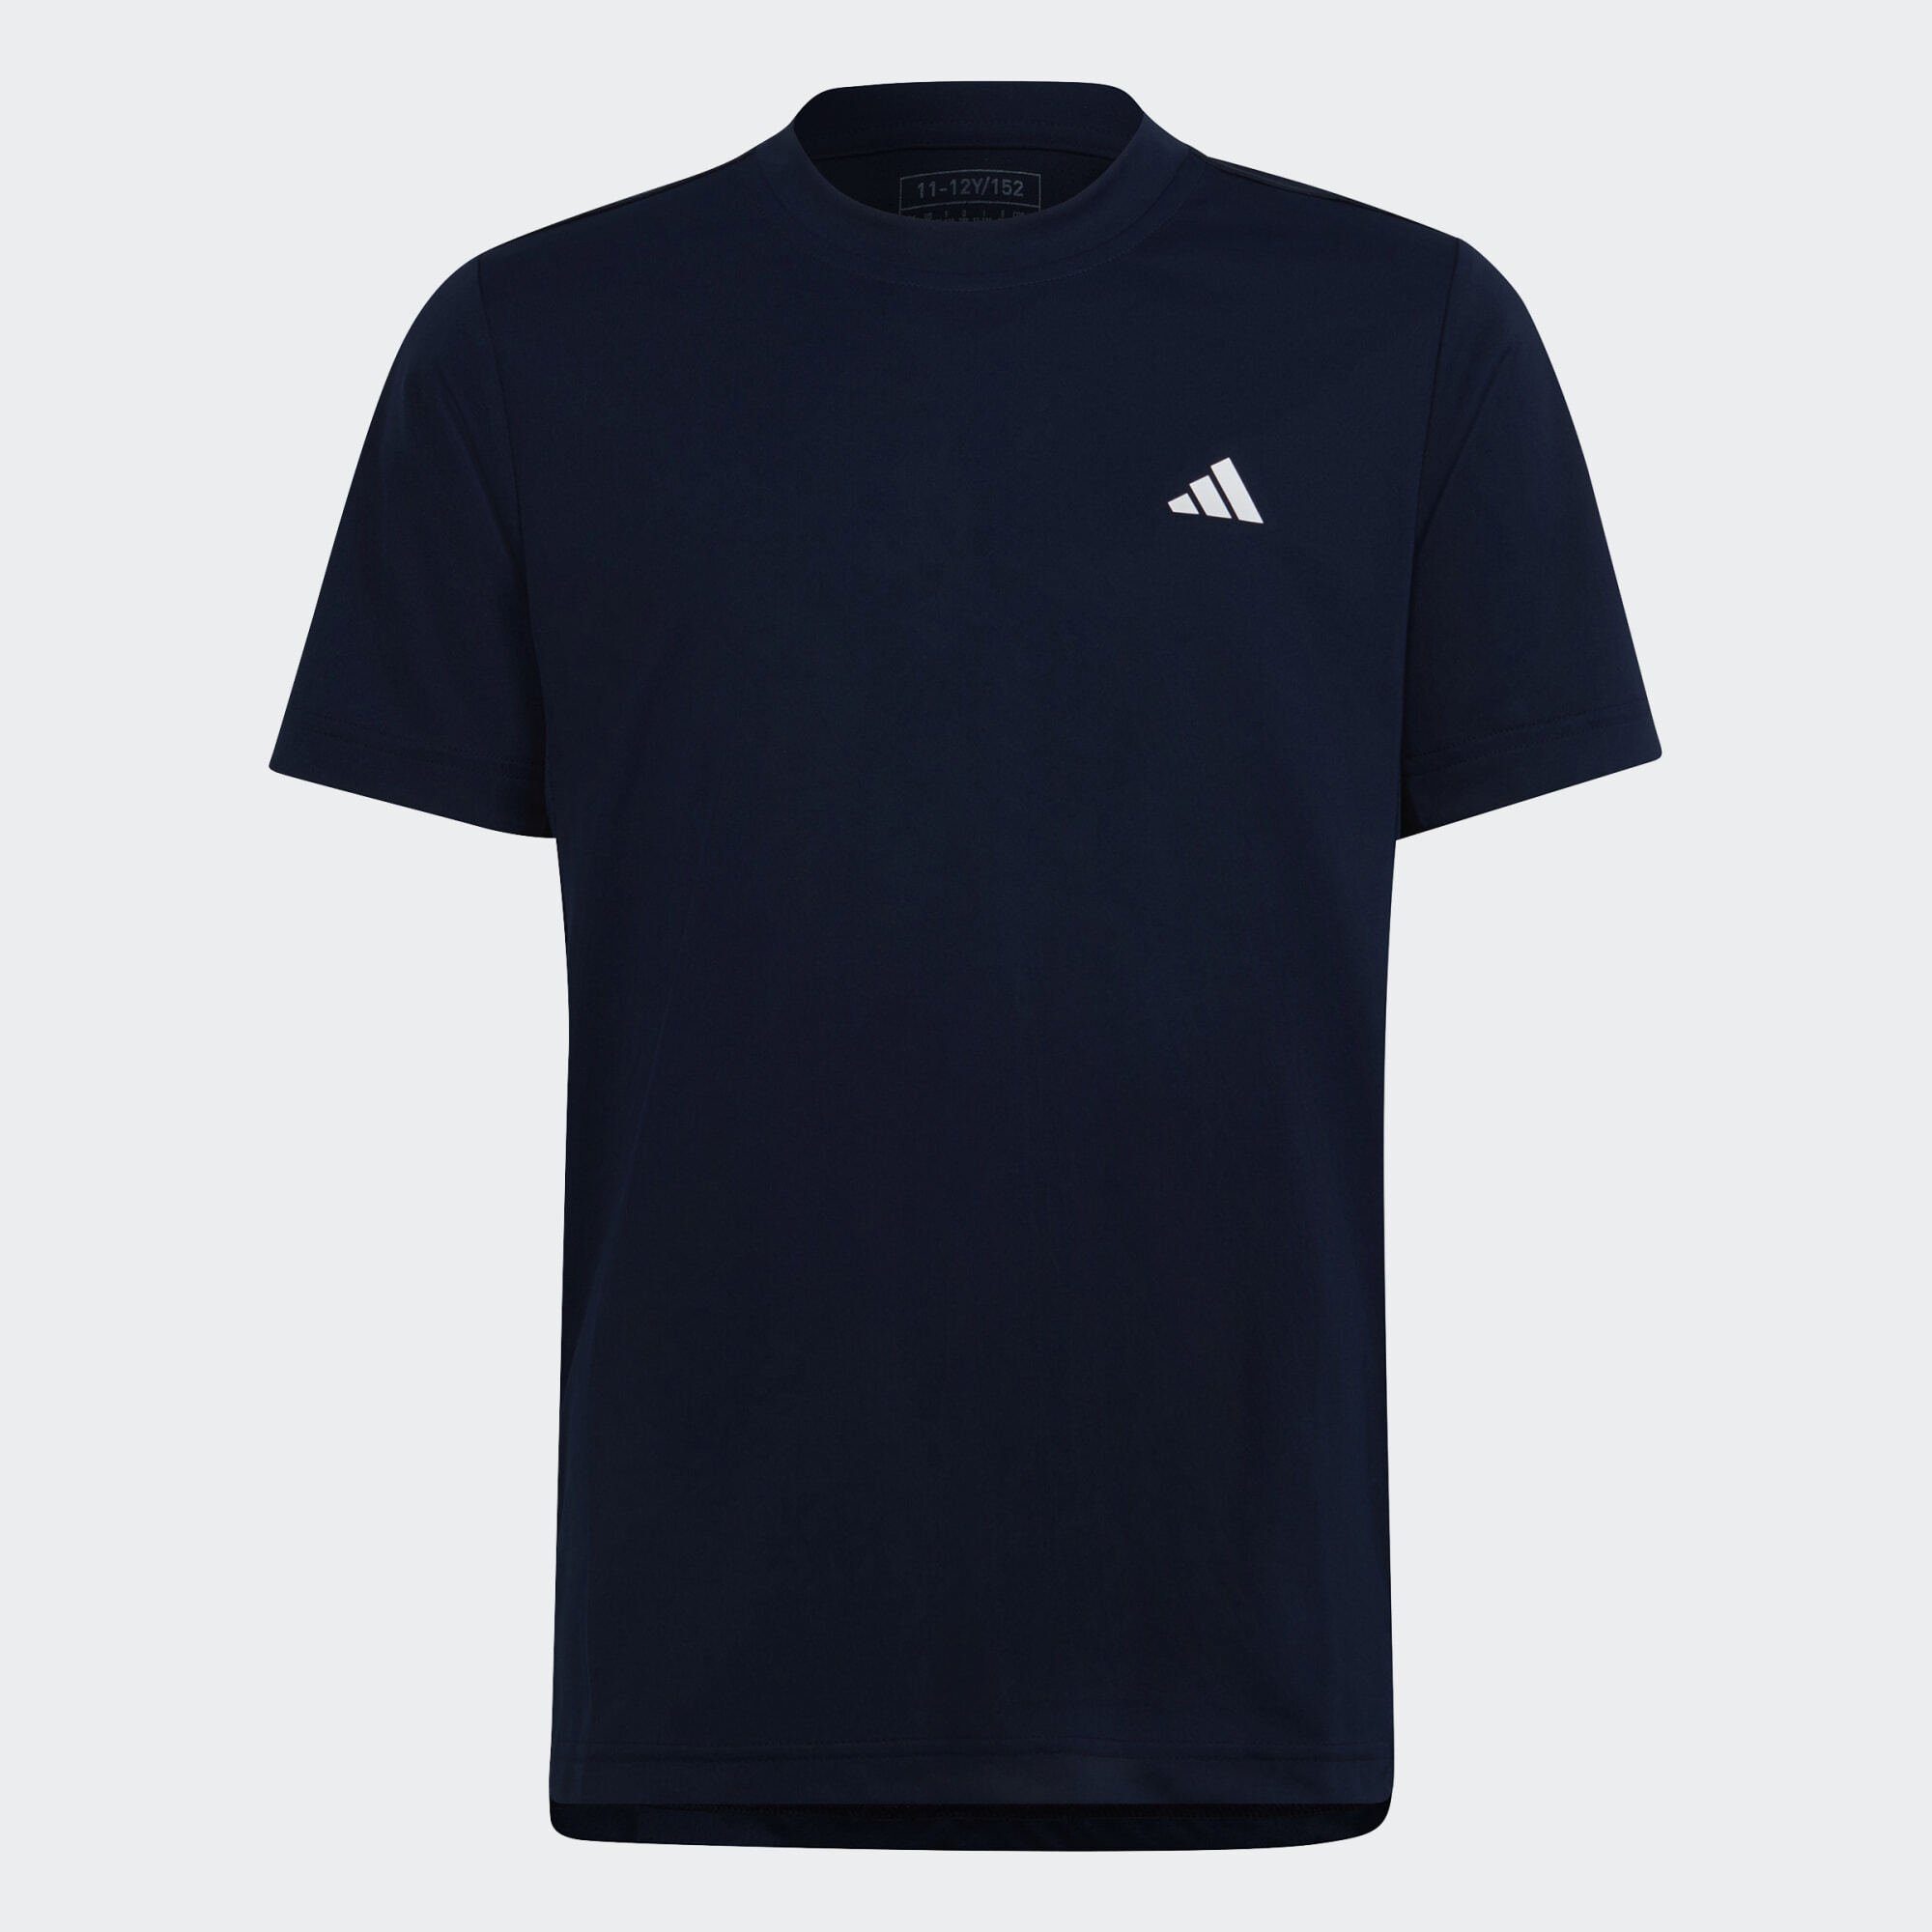 TENNIS adidas T-SHIRT Navy CLUB Performance Collegiate Funktionsshirt